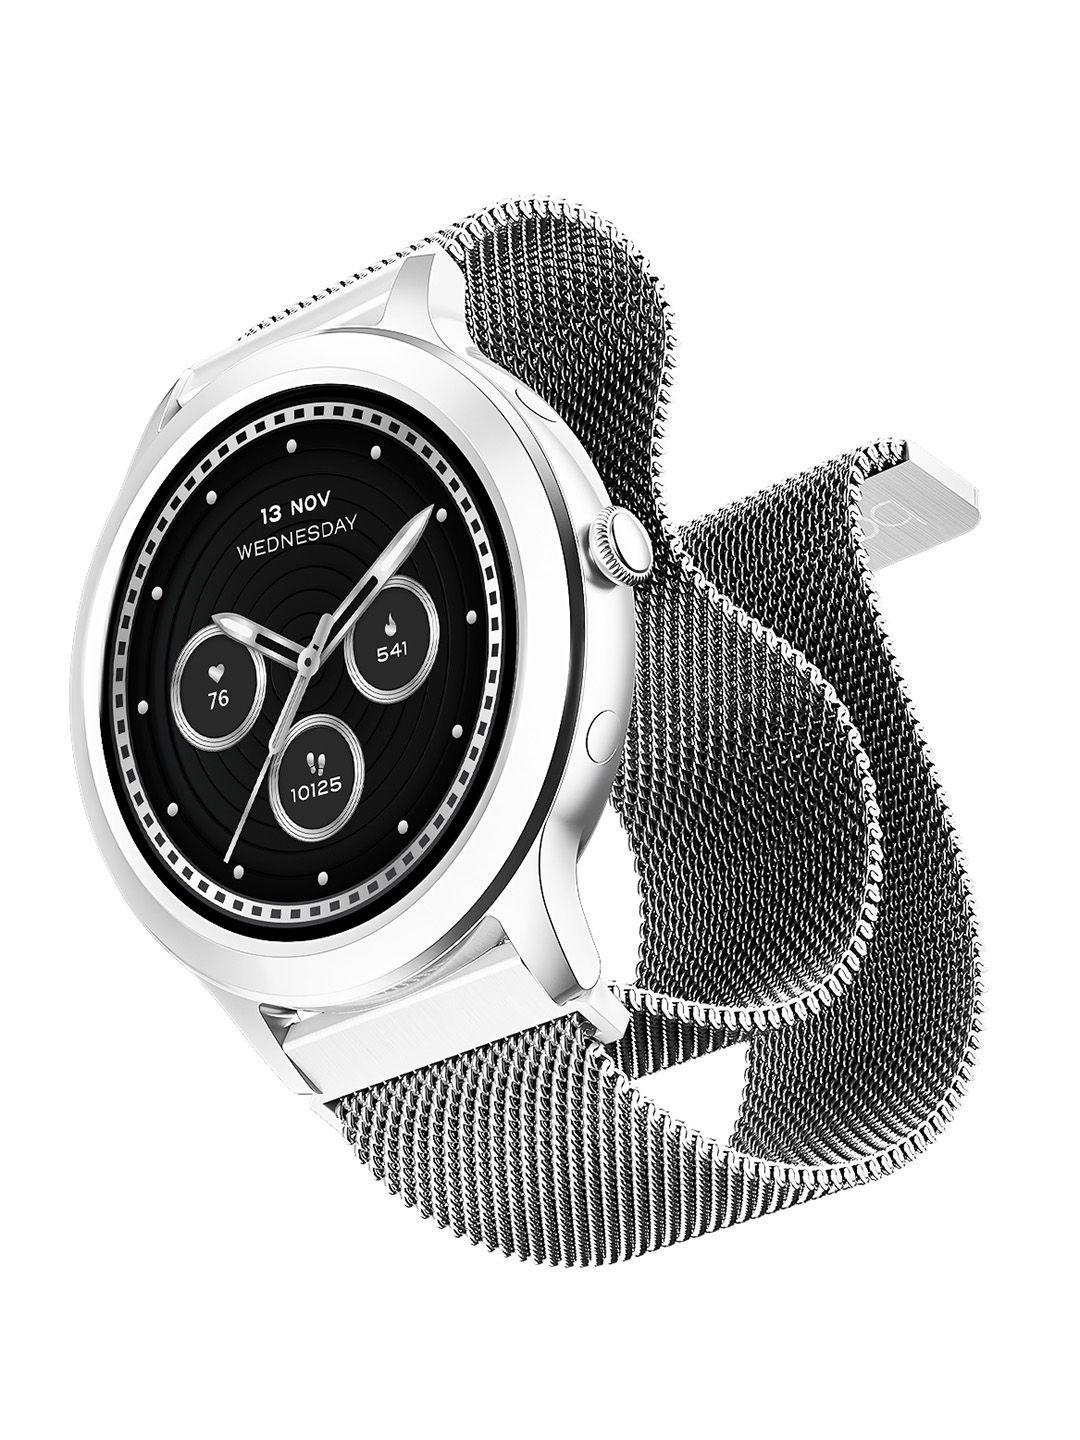 boat silver-toned enigma r32 smart watch